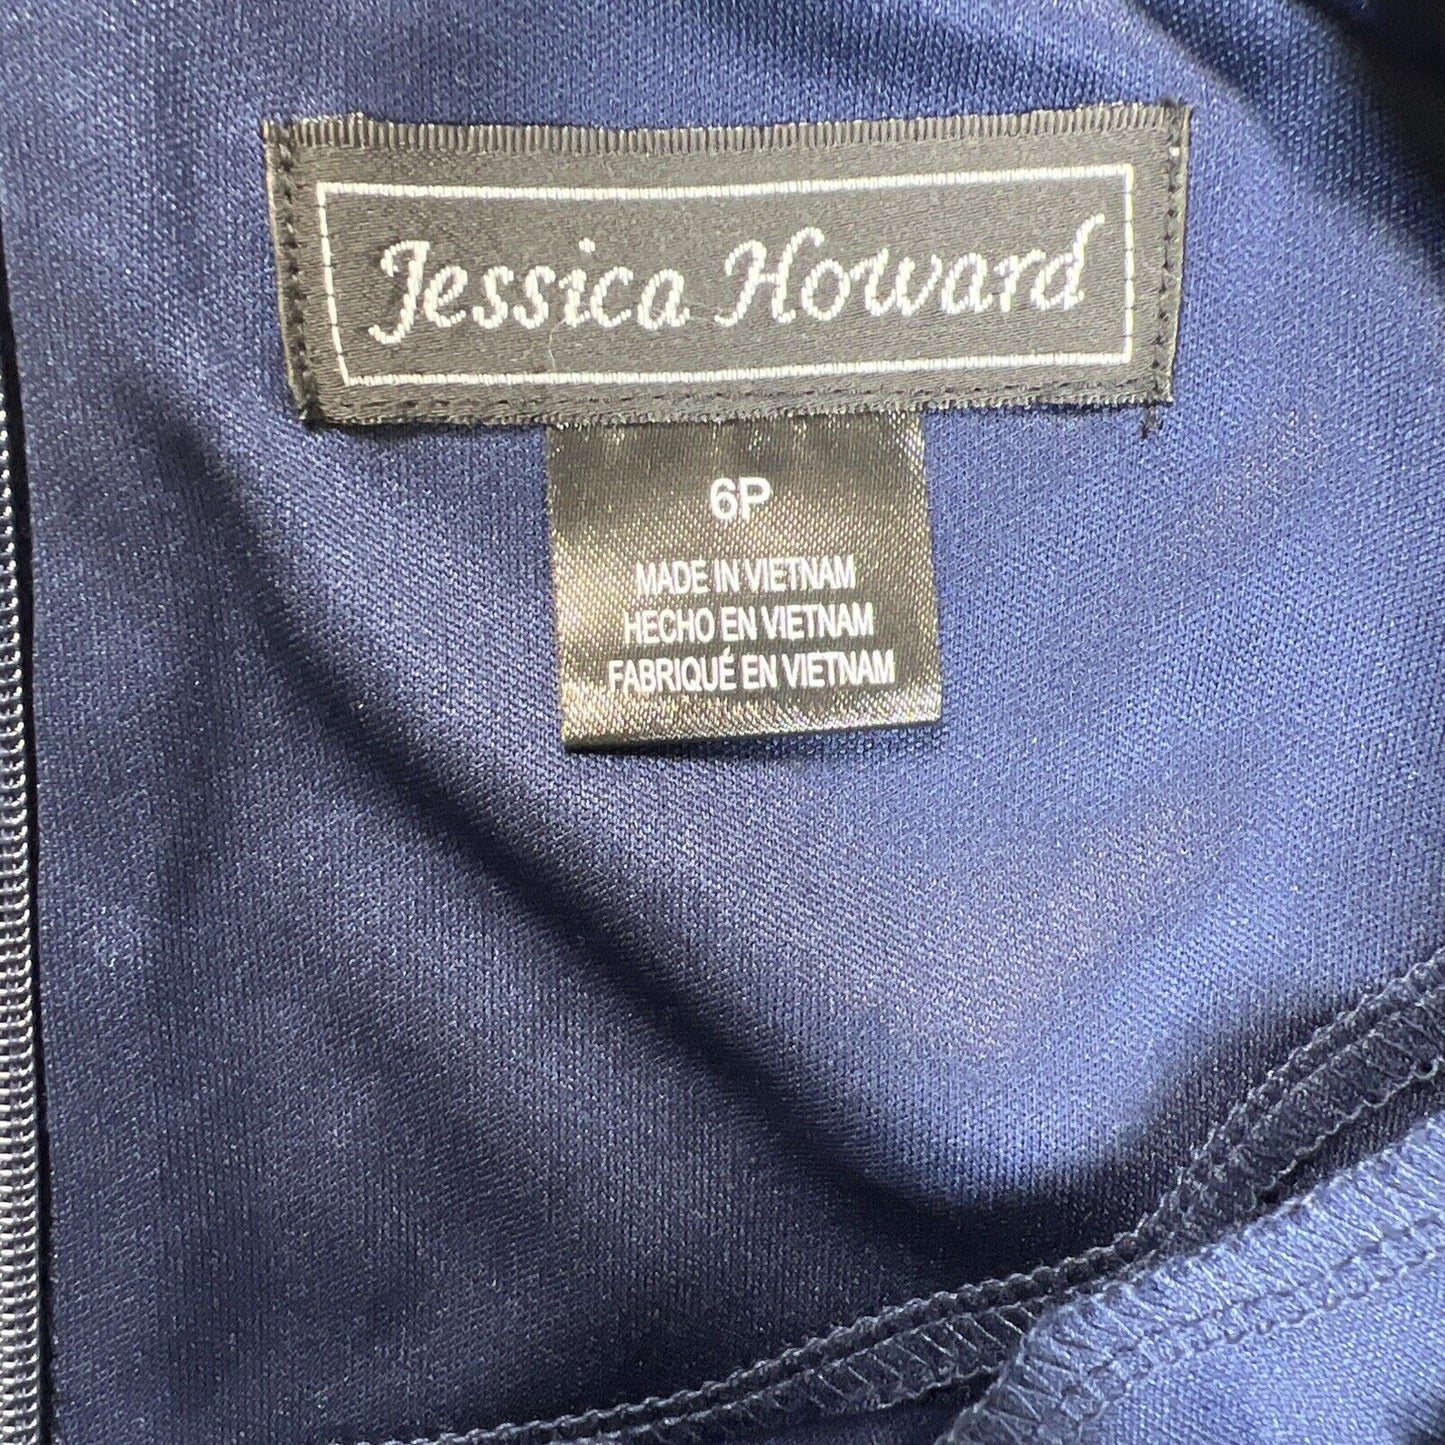 NEW Jessica Howard Women's Blue Sequin Lace Sheath Dress - Petite 6P